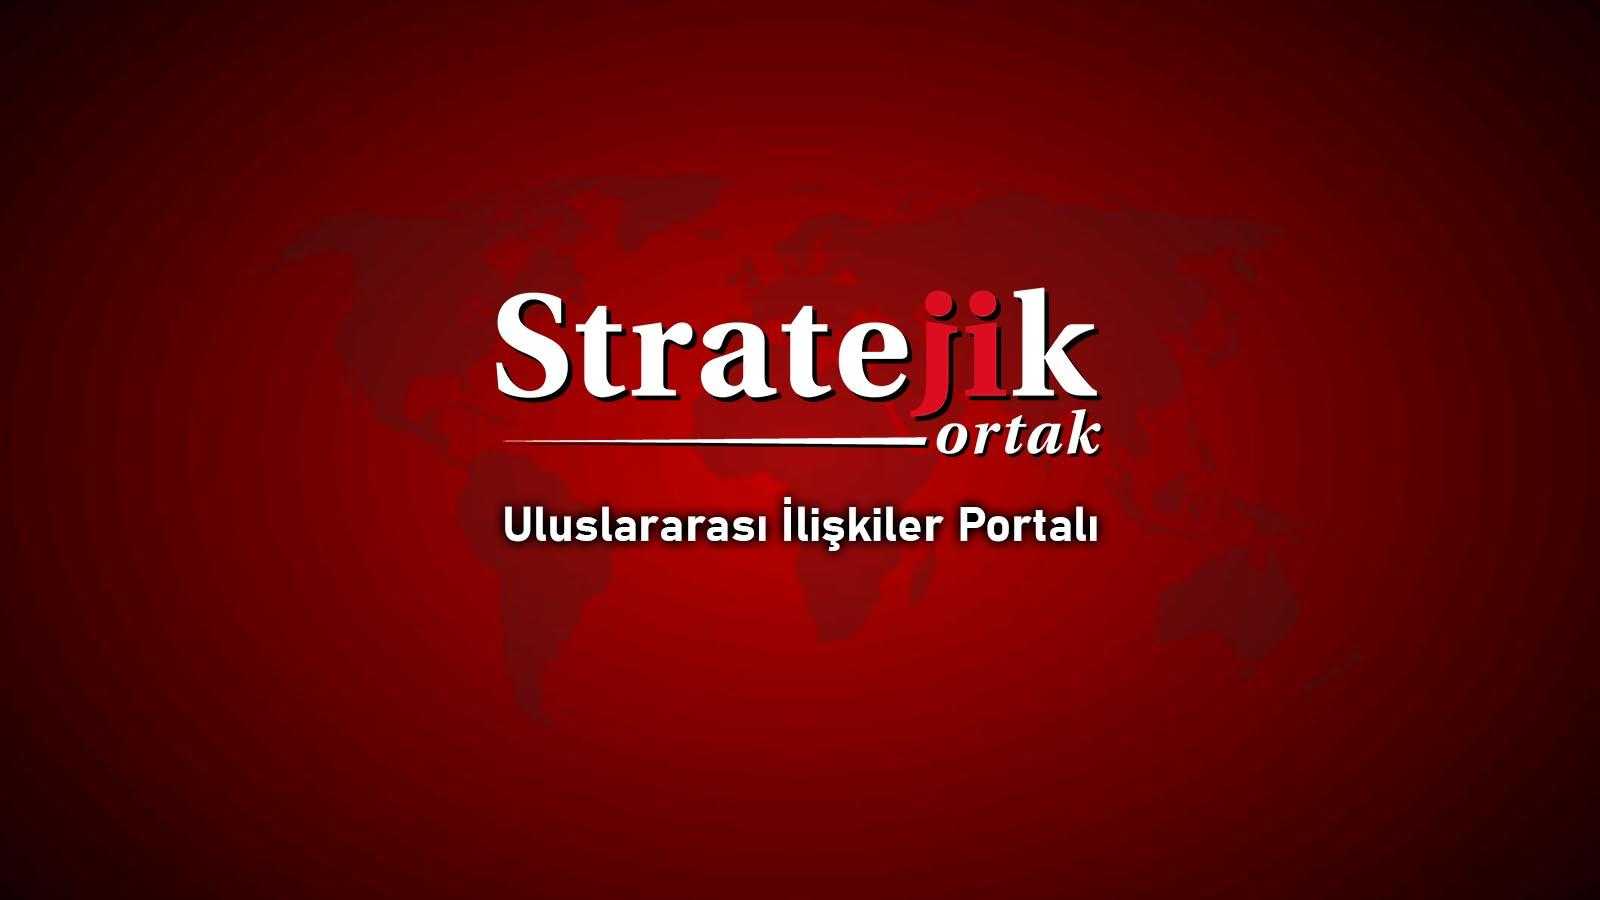 www.stratejikortak.com